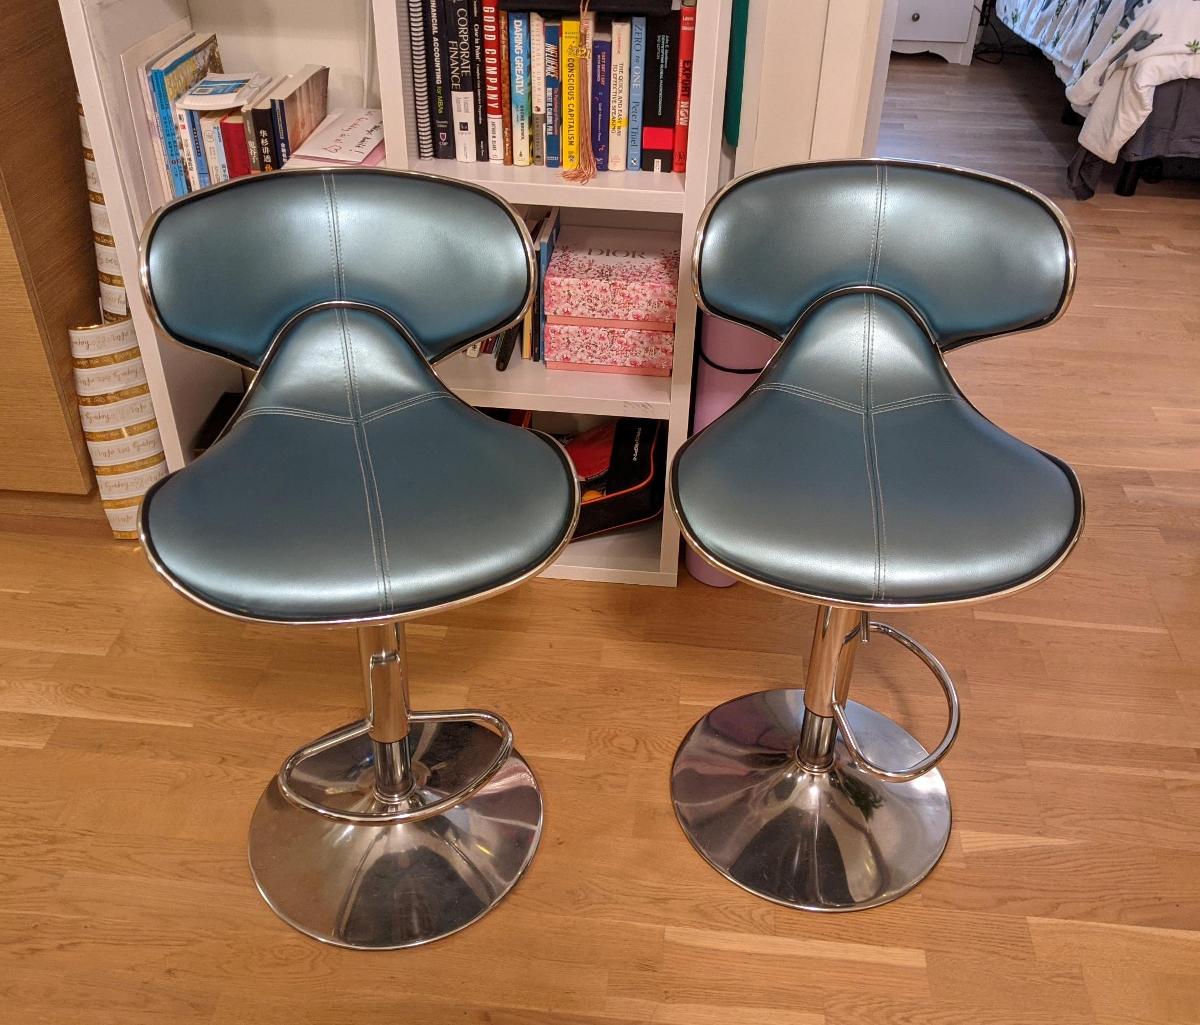 2 blue bar stools / tall kitchen chairs